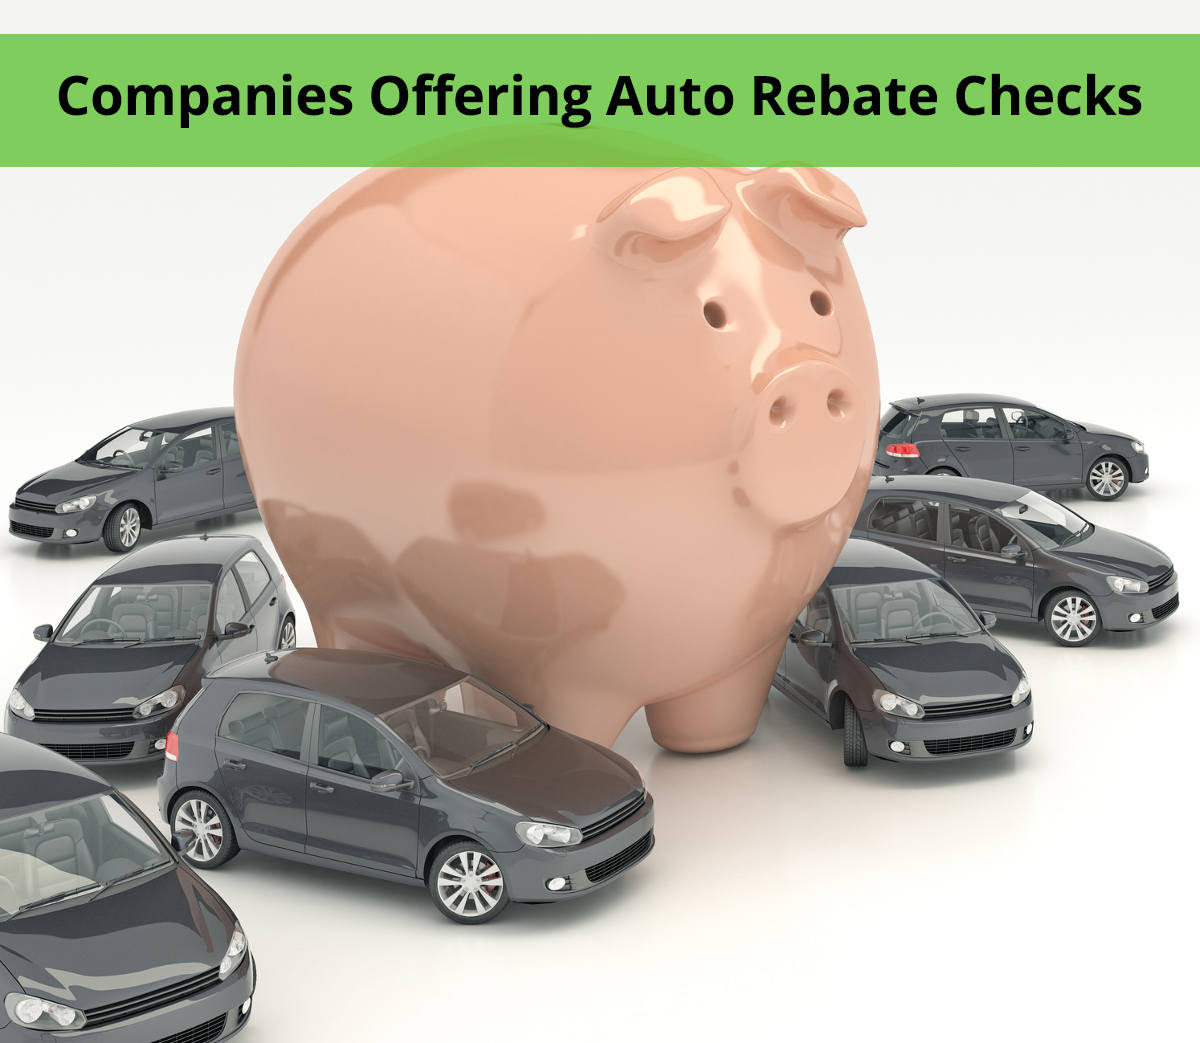 Companies Offering Auto Rebate Checks